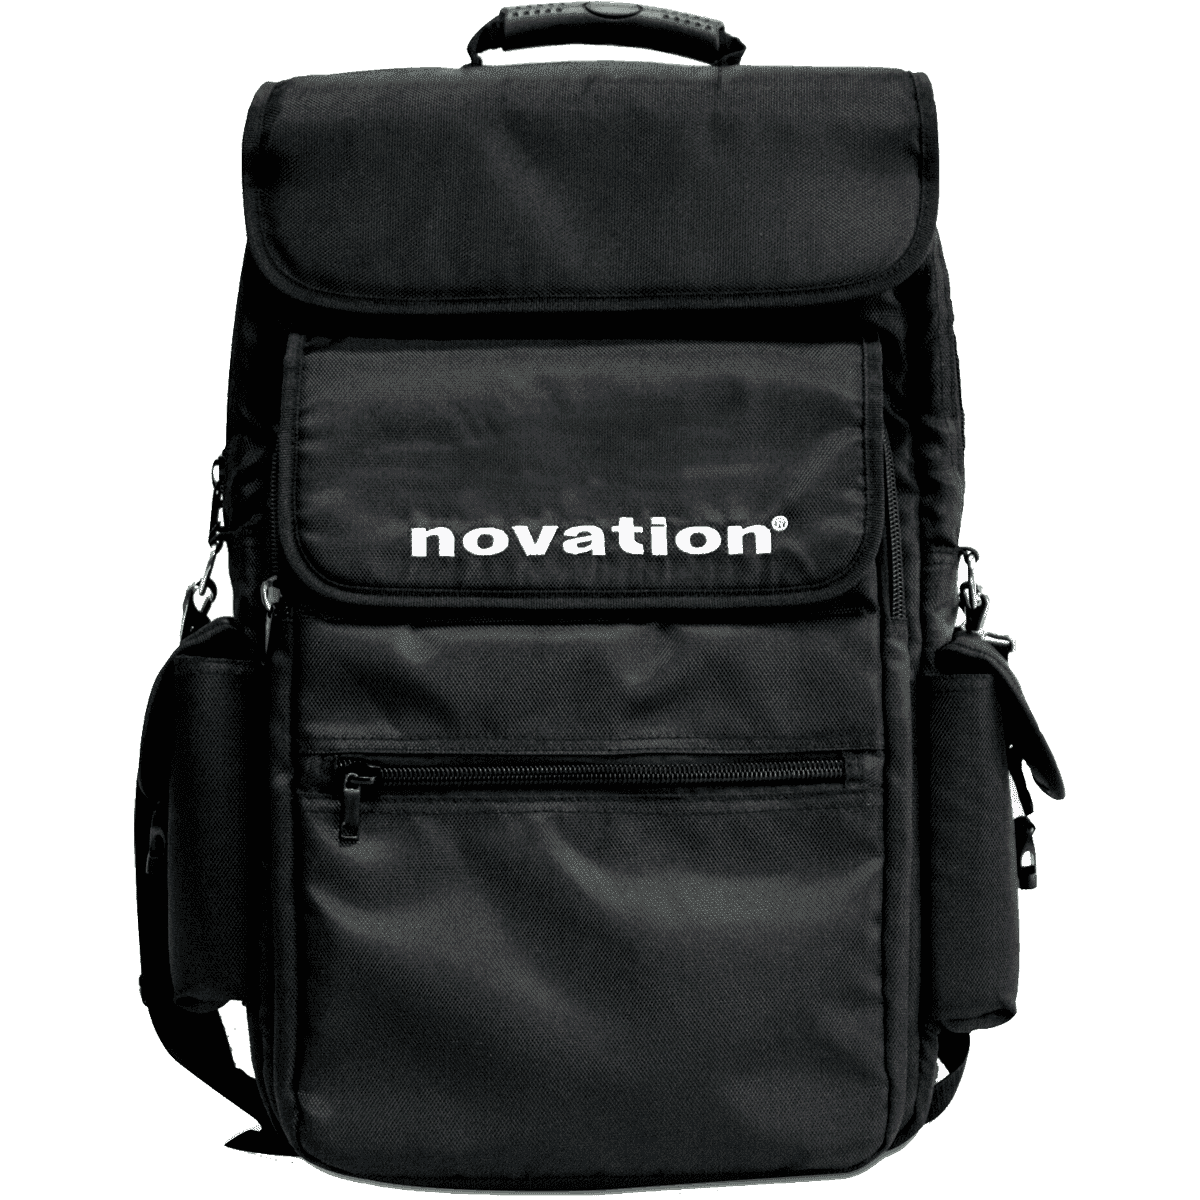 Novation Backpack Case For 25 key MIDI Keyboard